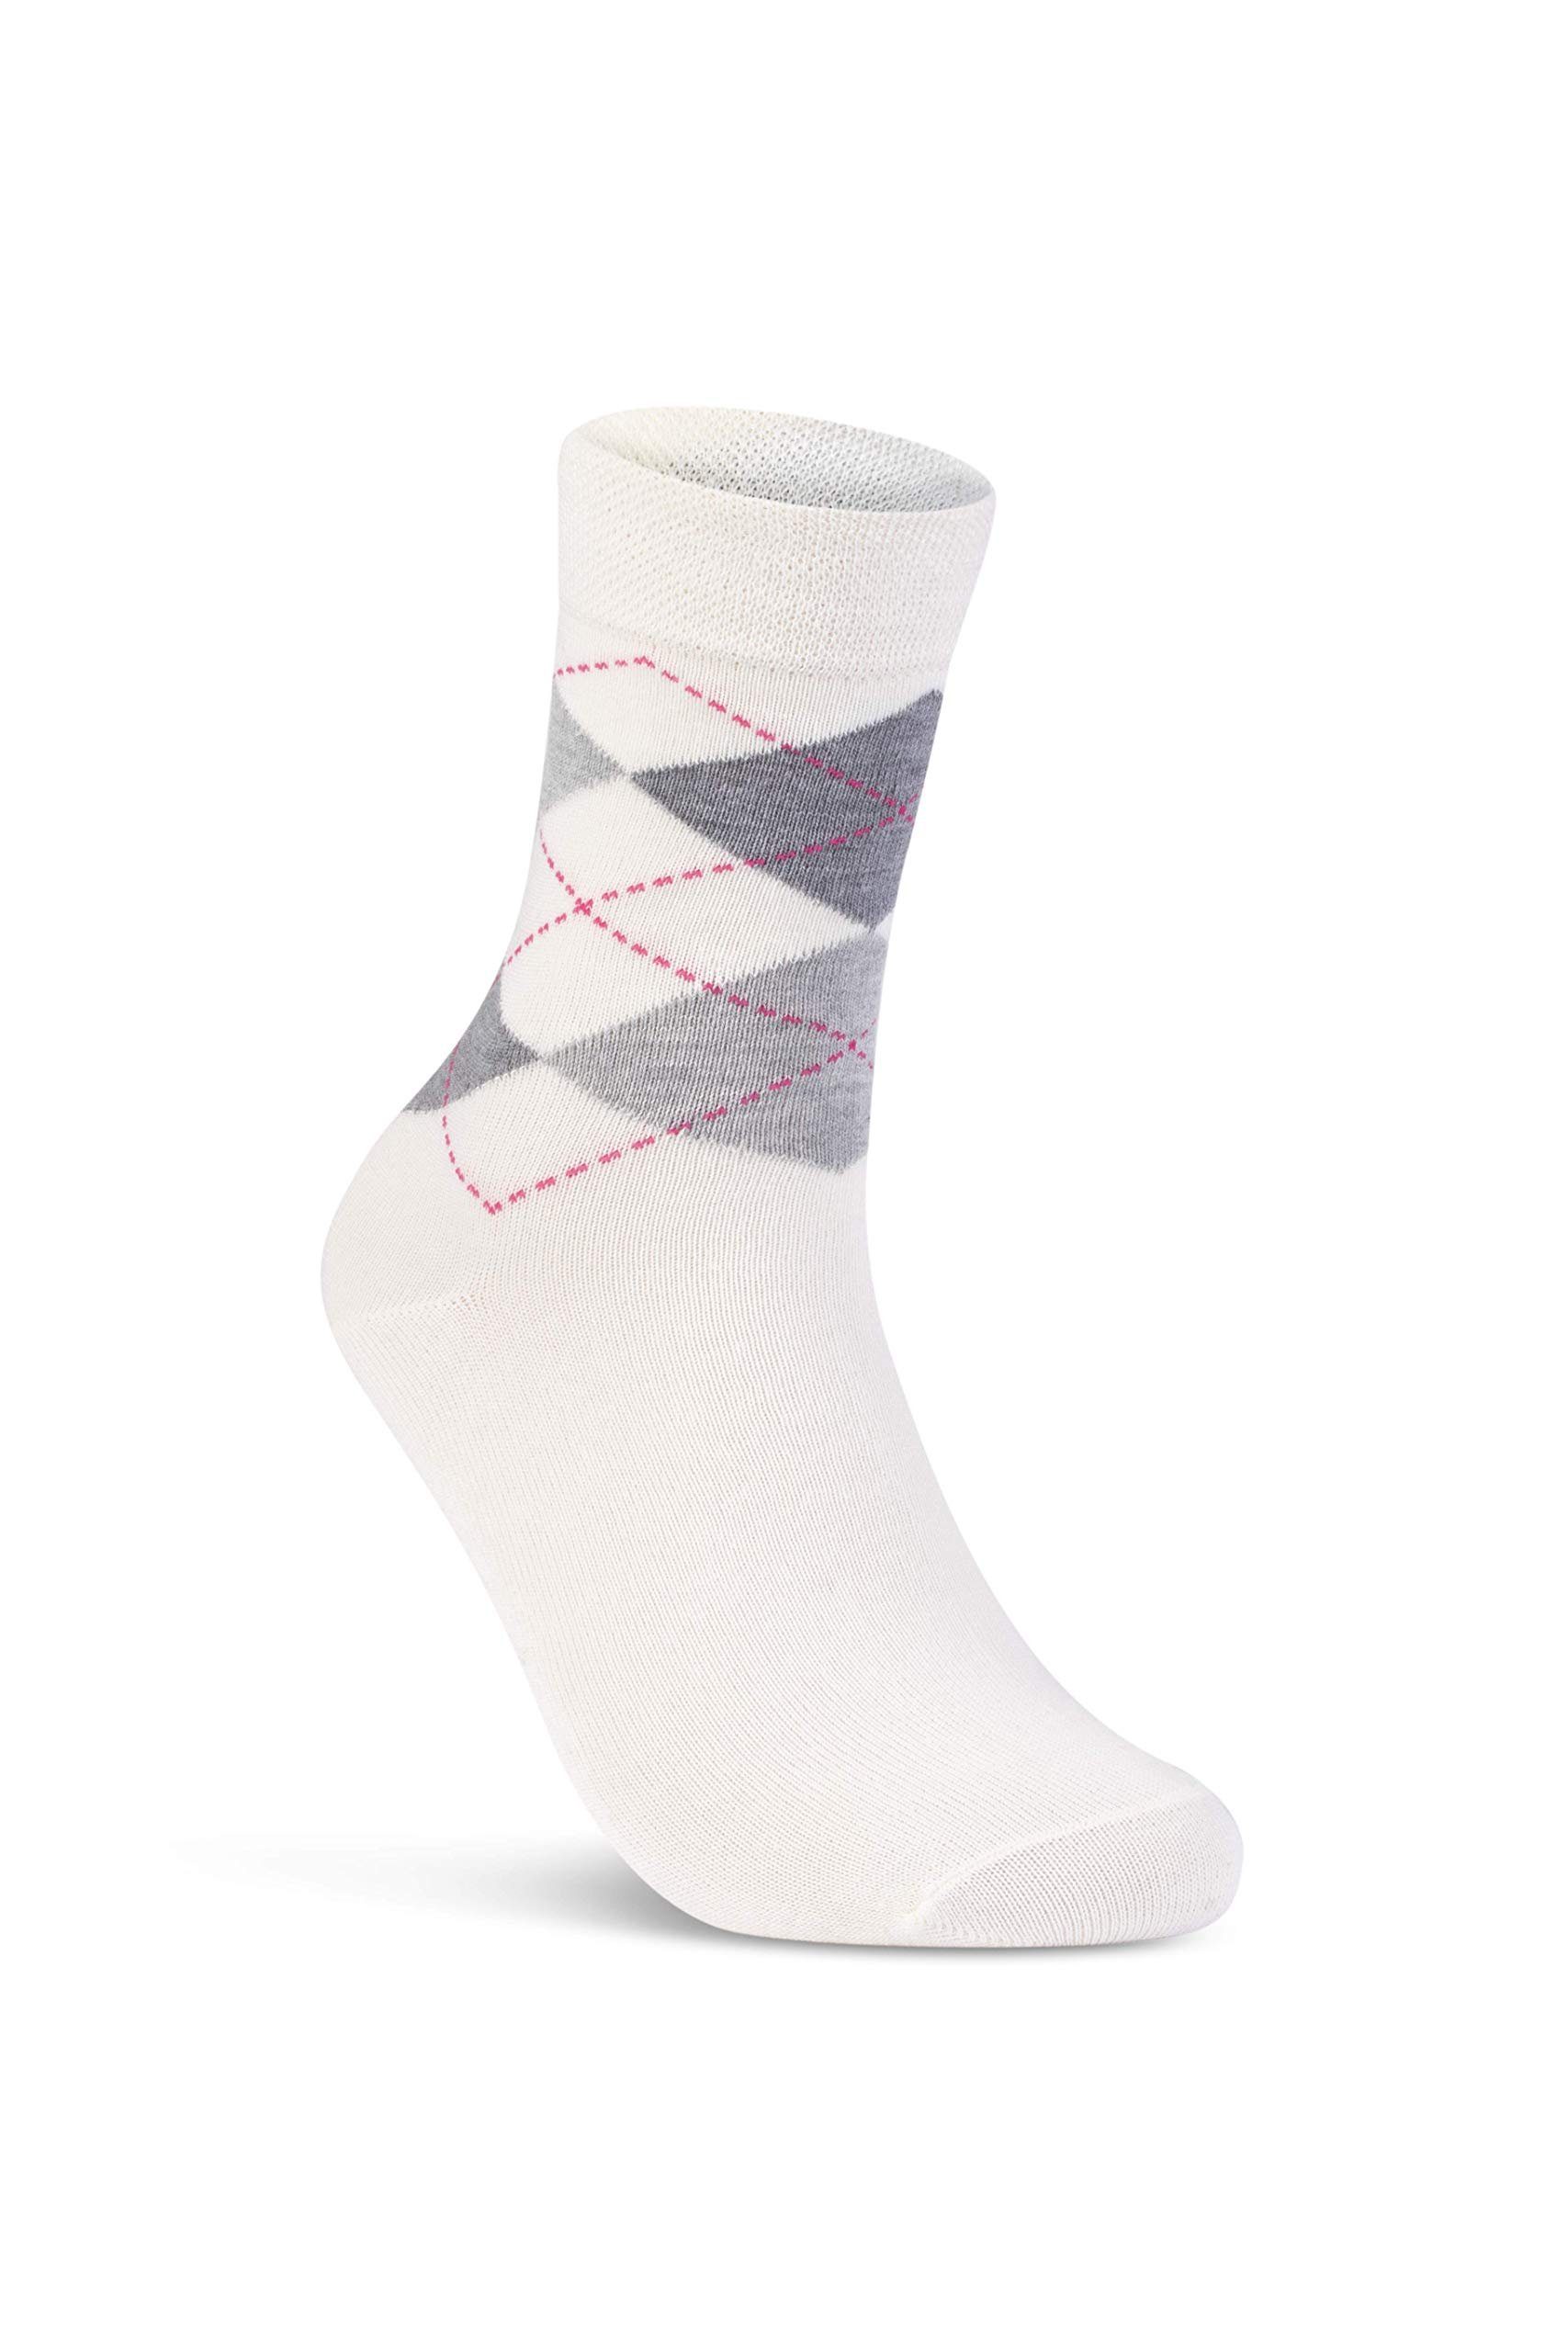 Damen Komfortbund 12 Kariert WP Basicsocken Socken (E-800) 6 oder Paar Karomuster 35-38) sockenkauf24 Baumwolle (6-Paar,